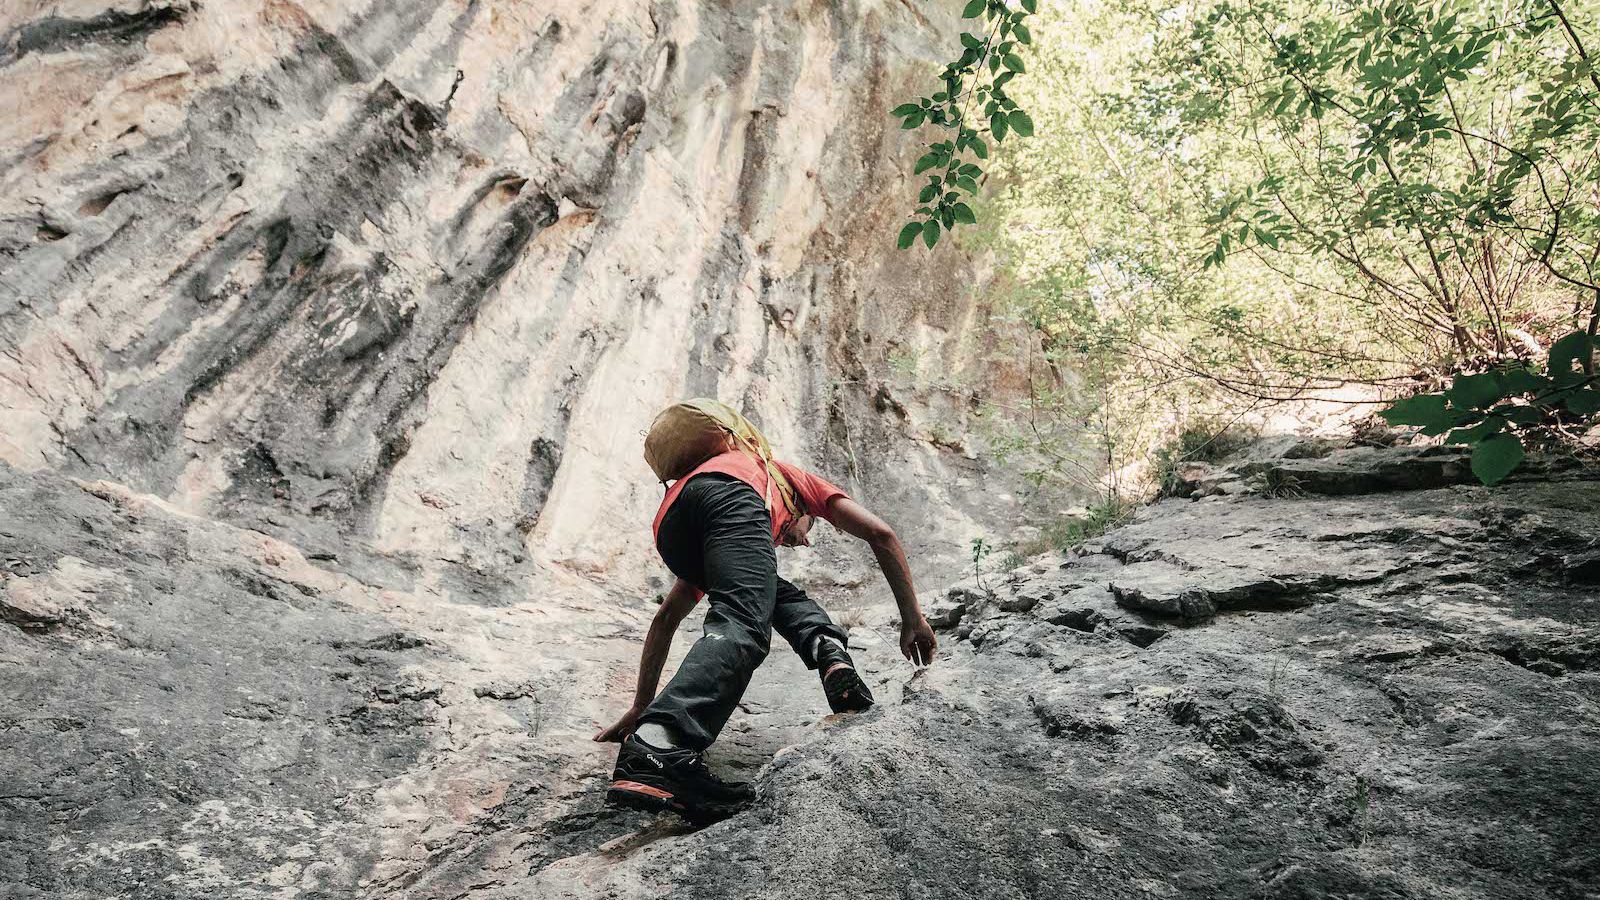 A climber ascending a steep, technical approach